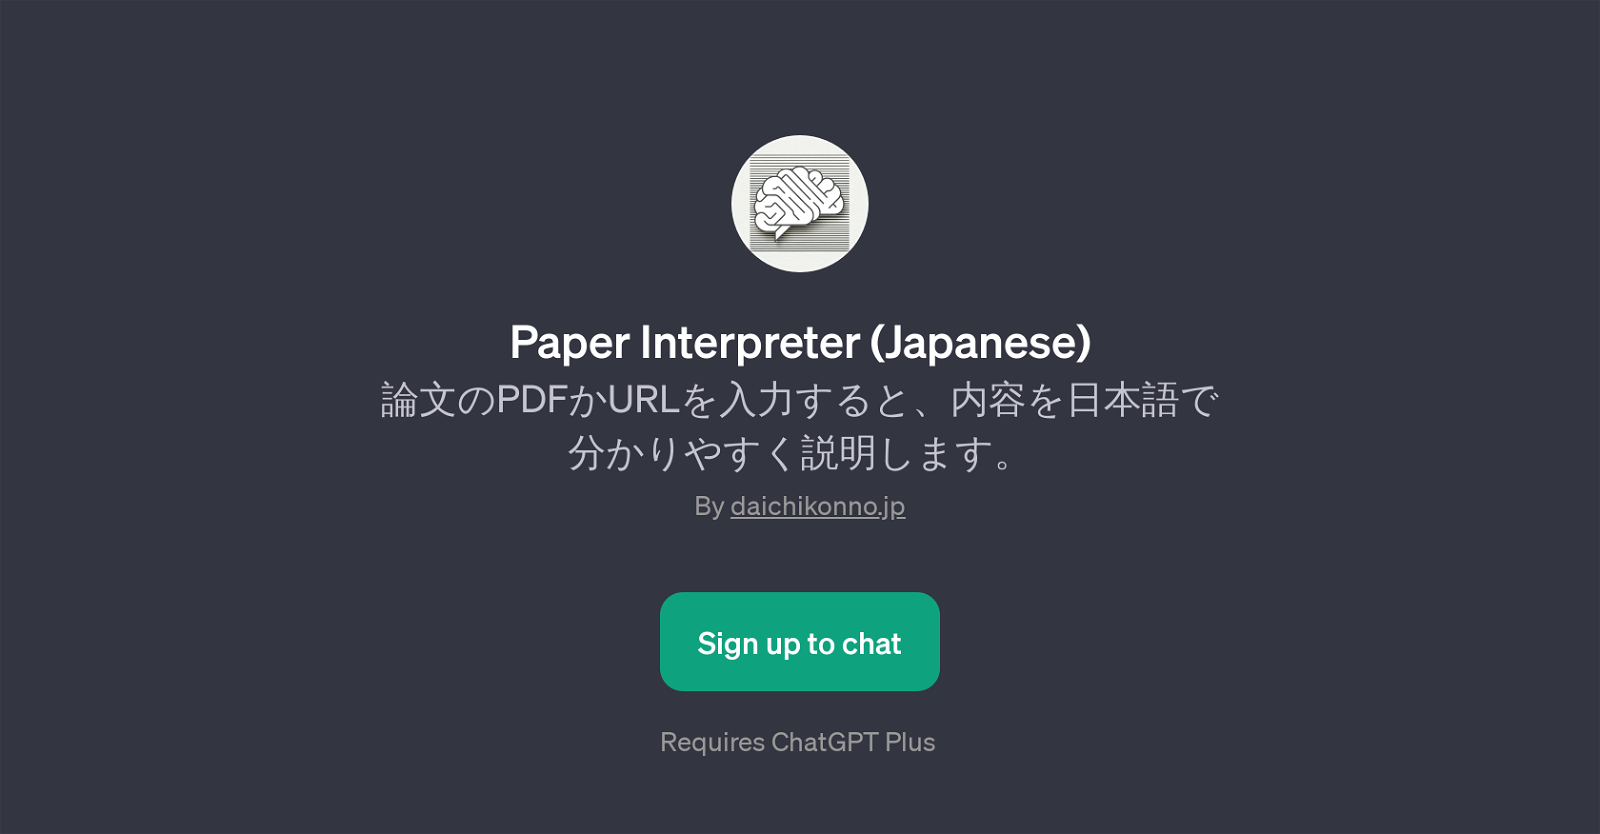 Paper Interpreter (Japanese) website